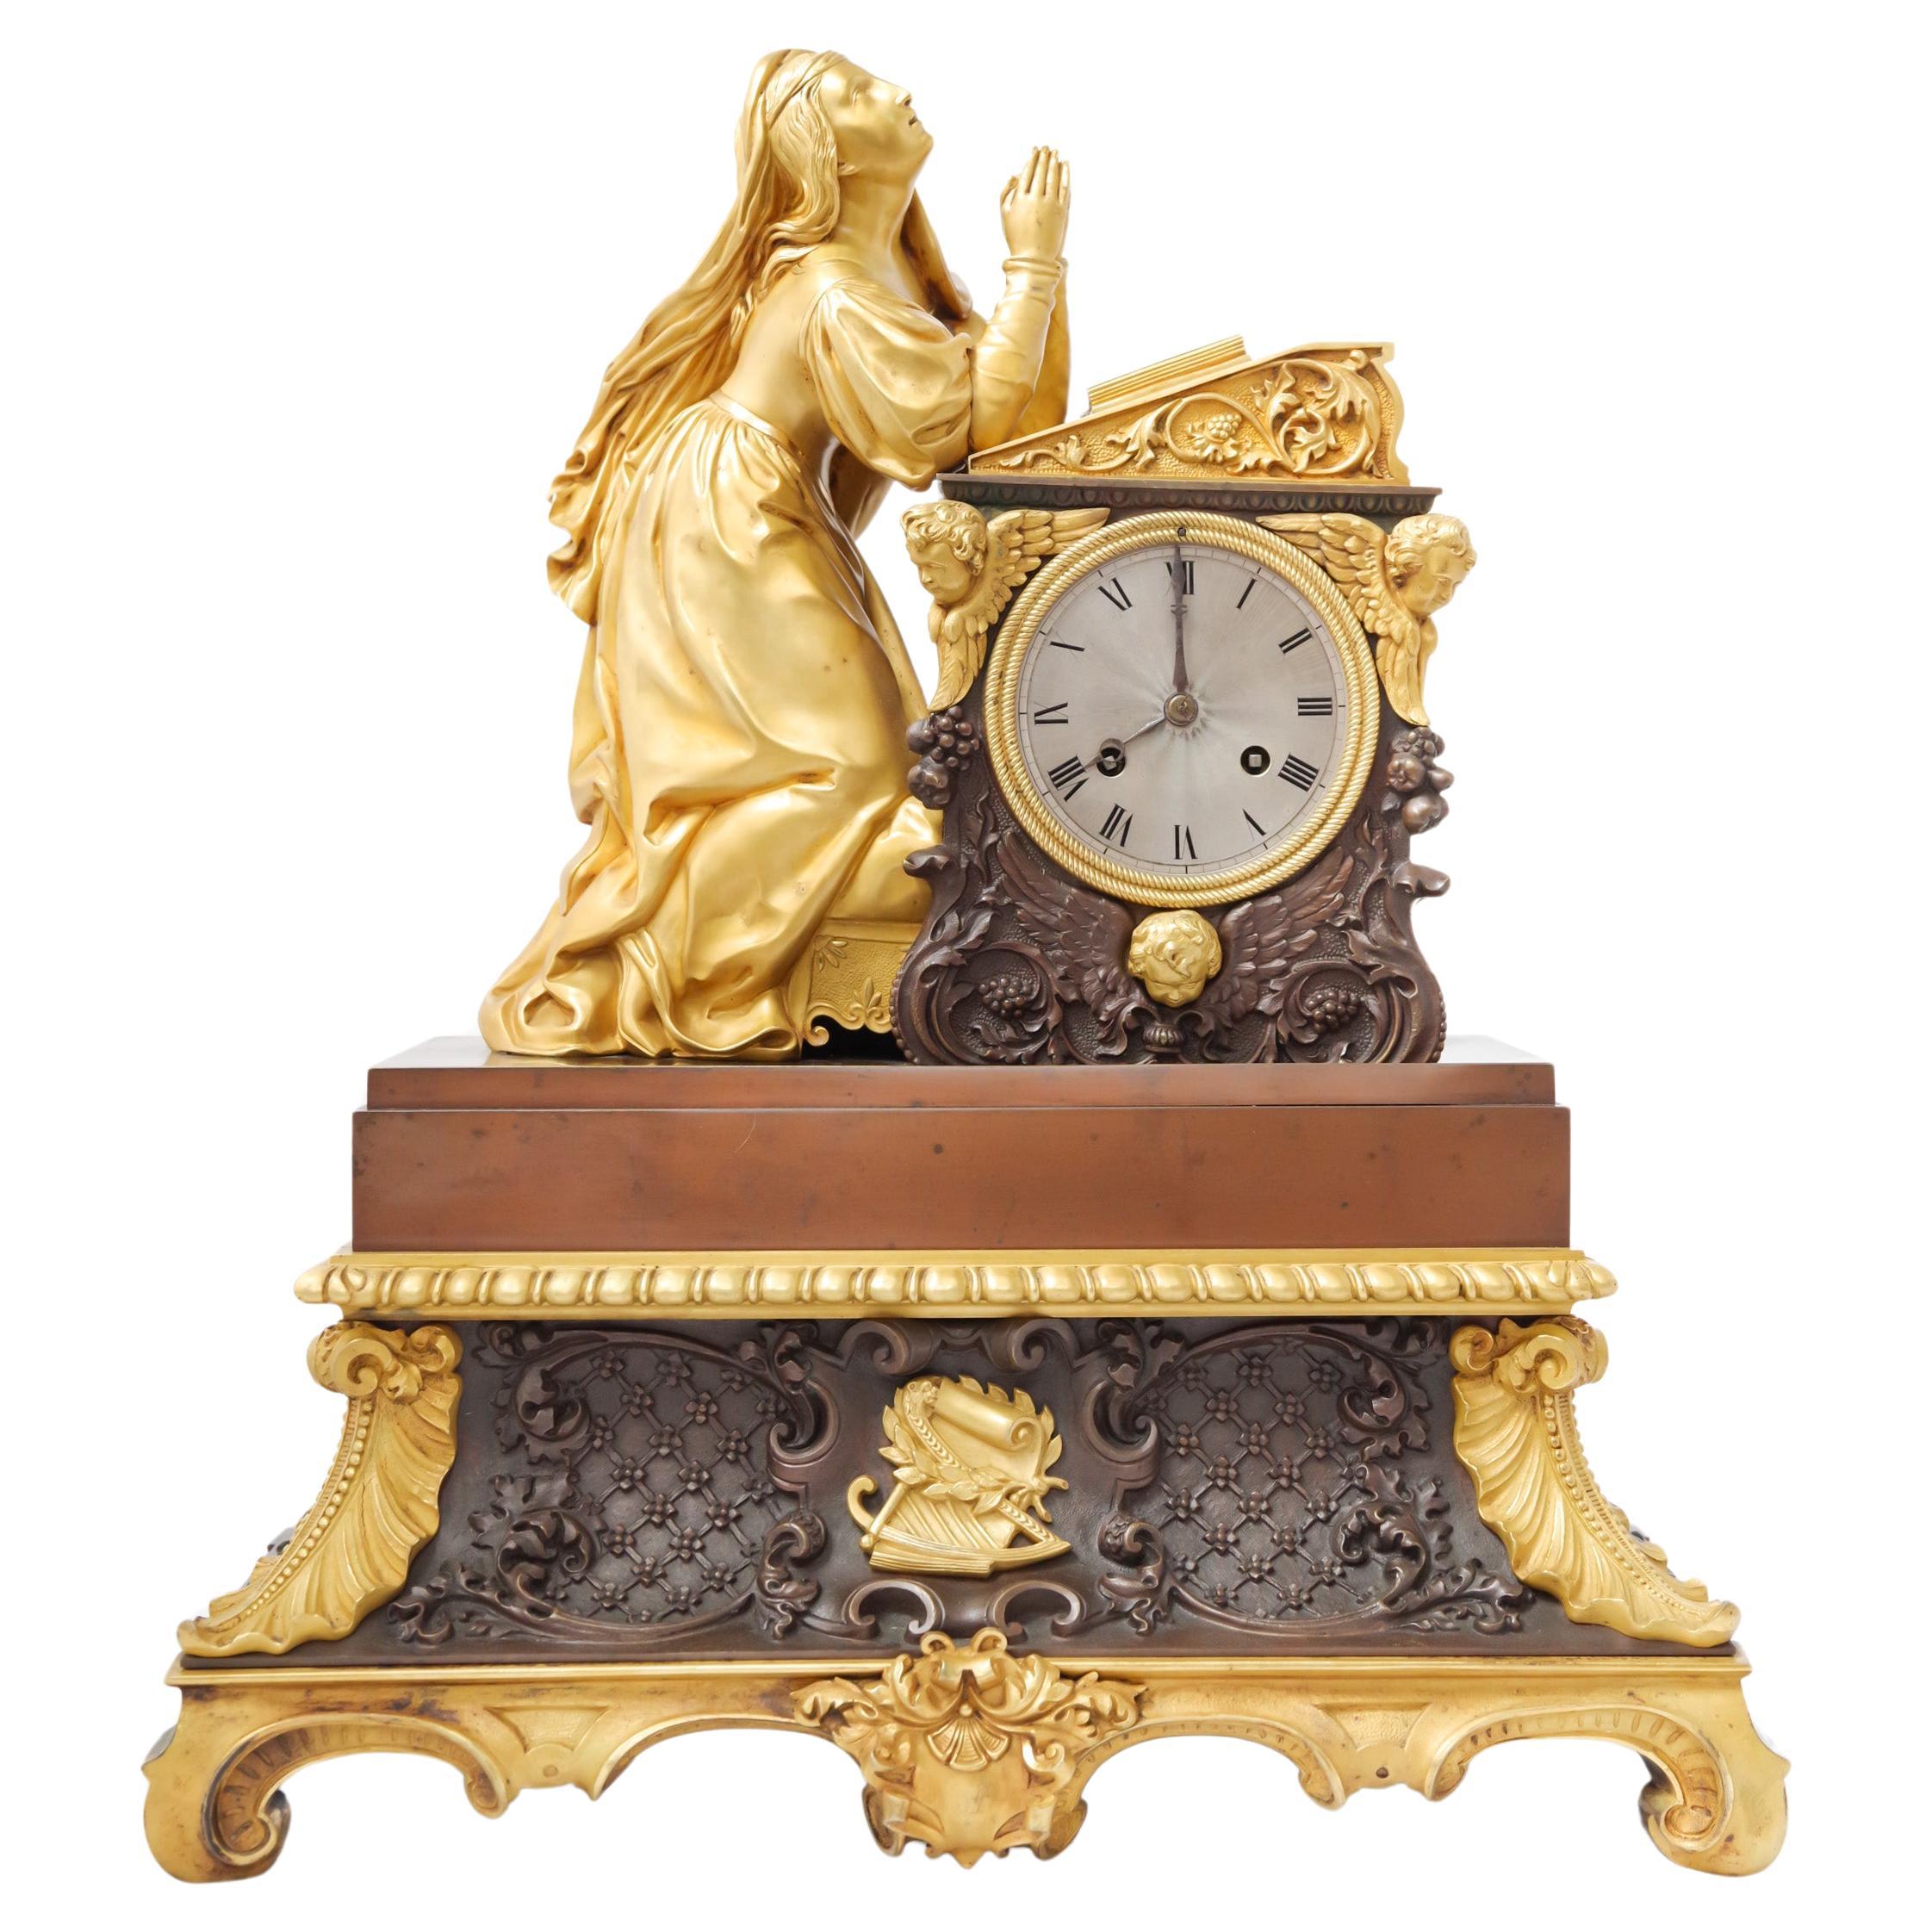 Restauration Era French Bronze Clock Depicting a Woman in Prayer